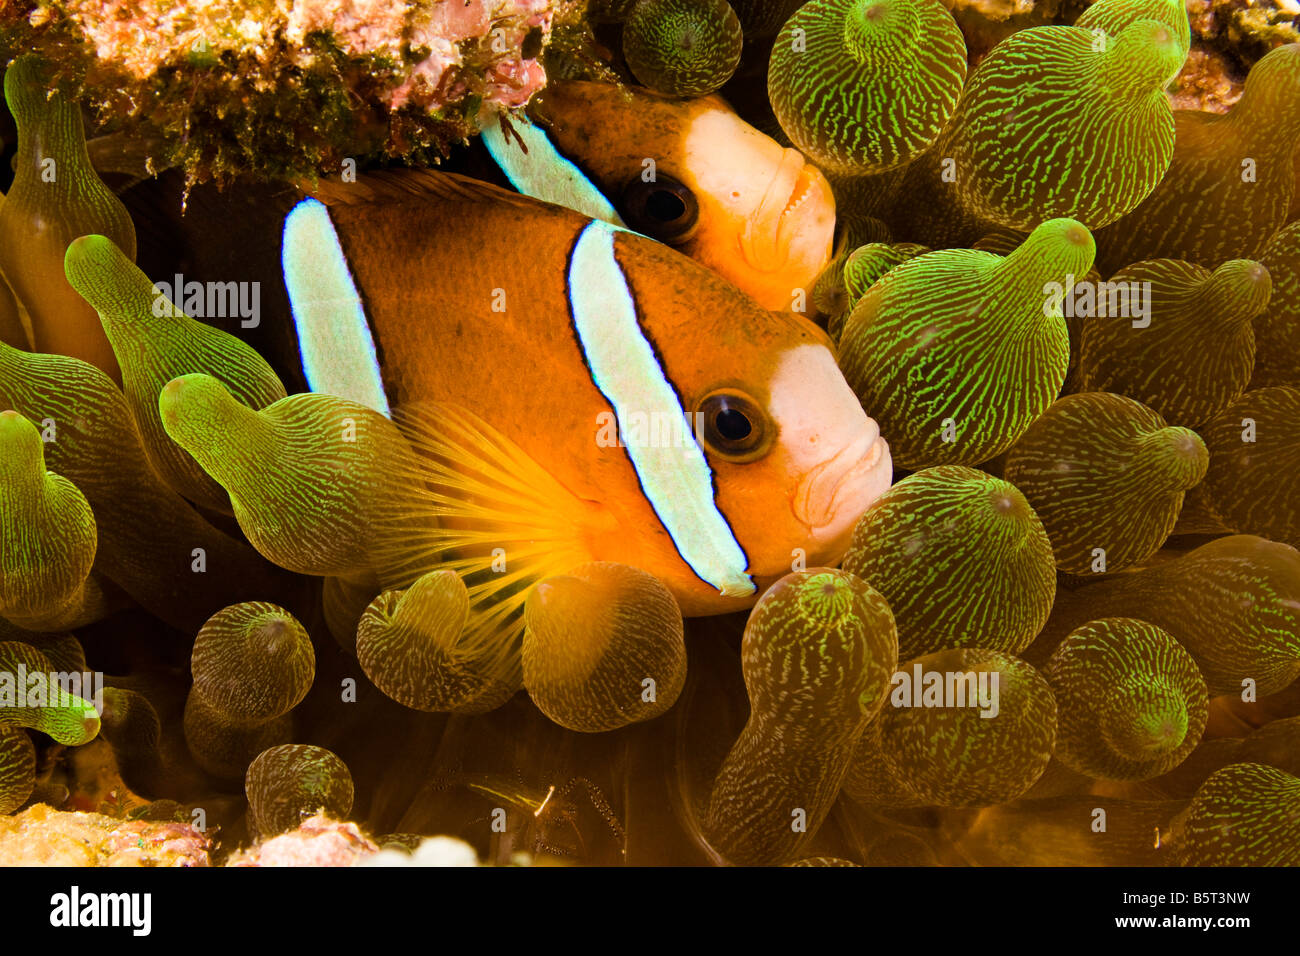 Clark's anemonefish, Amphiprion clarkii, in sea anemone, Entacmaea quadricolor, Komodo, Indonesia. Stock Photo